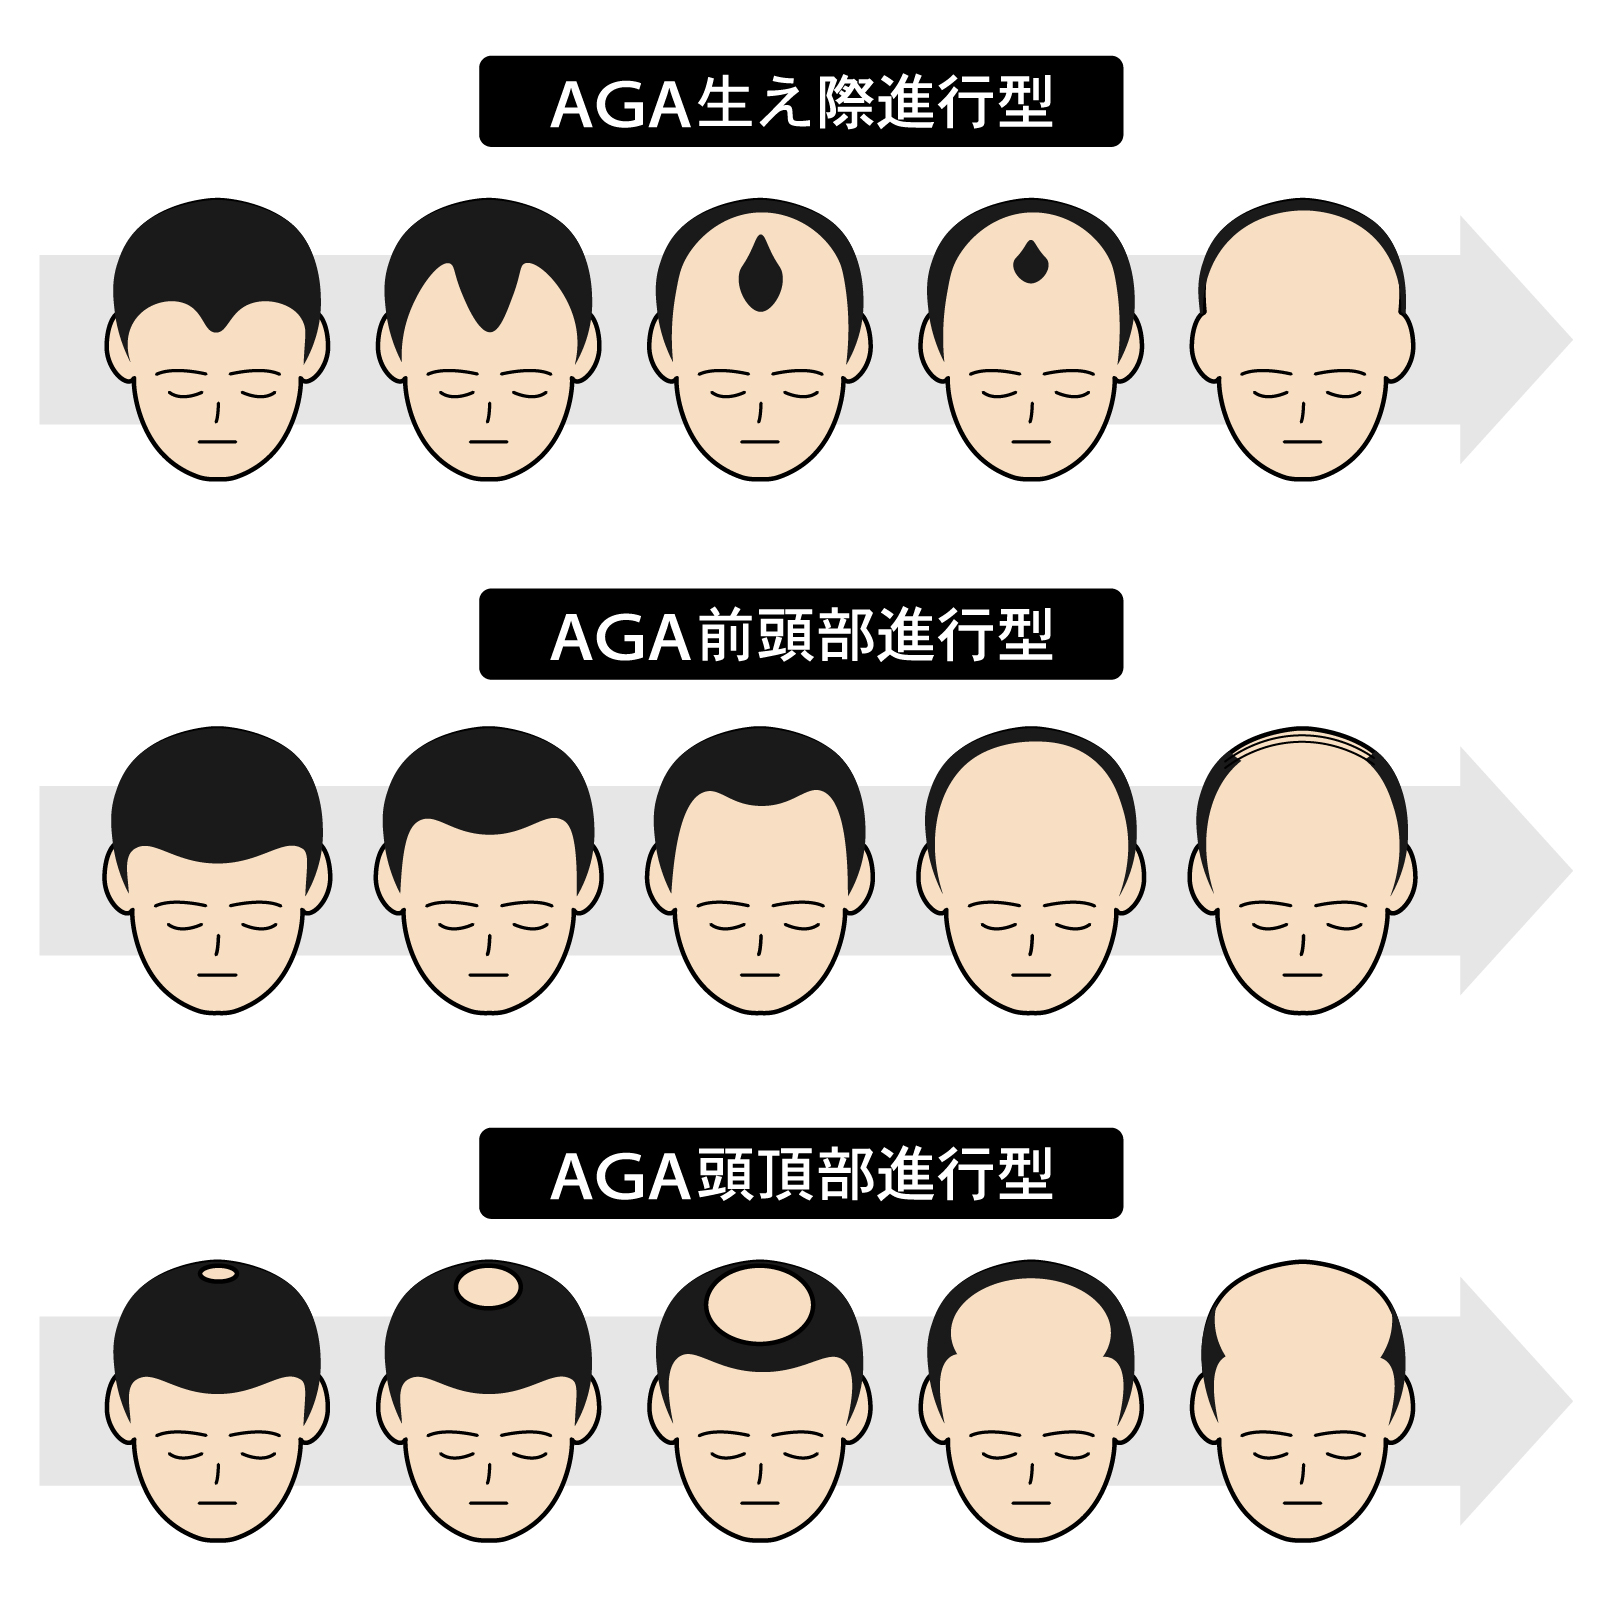 AGA：男性ホルモン型脱毛症（男性型脱毛症）治療1